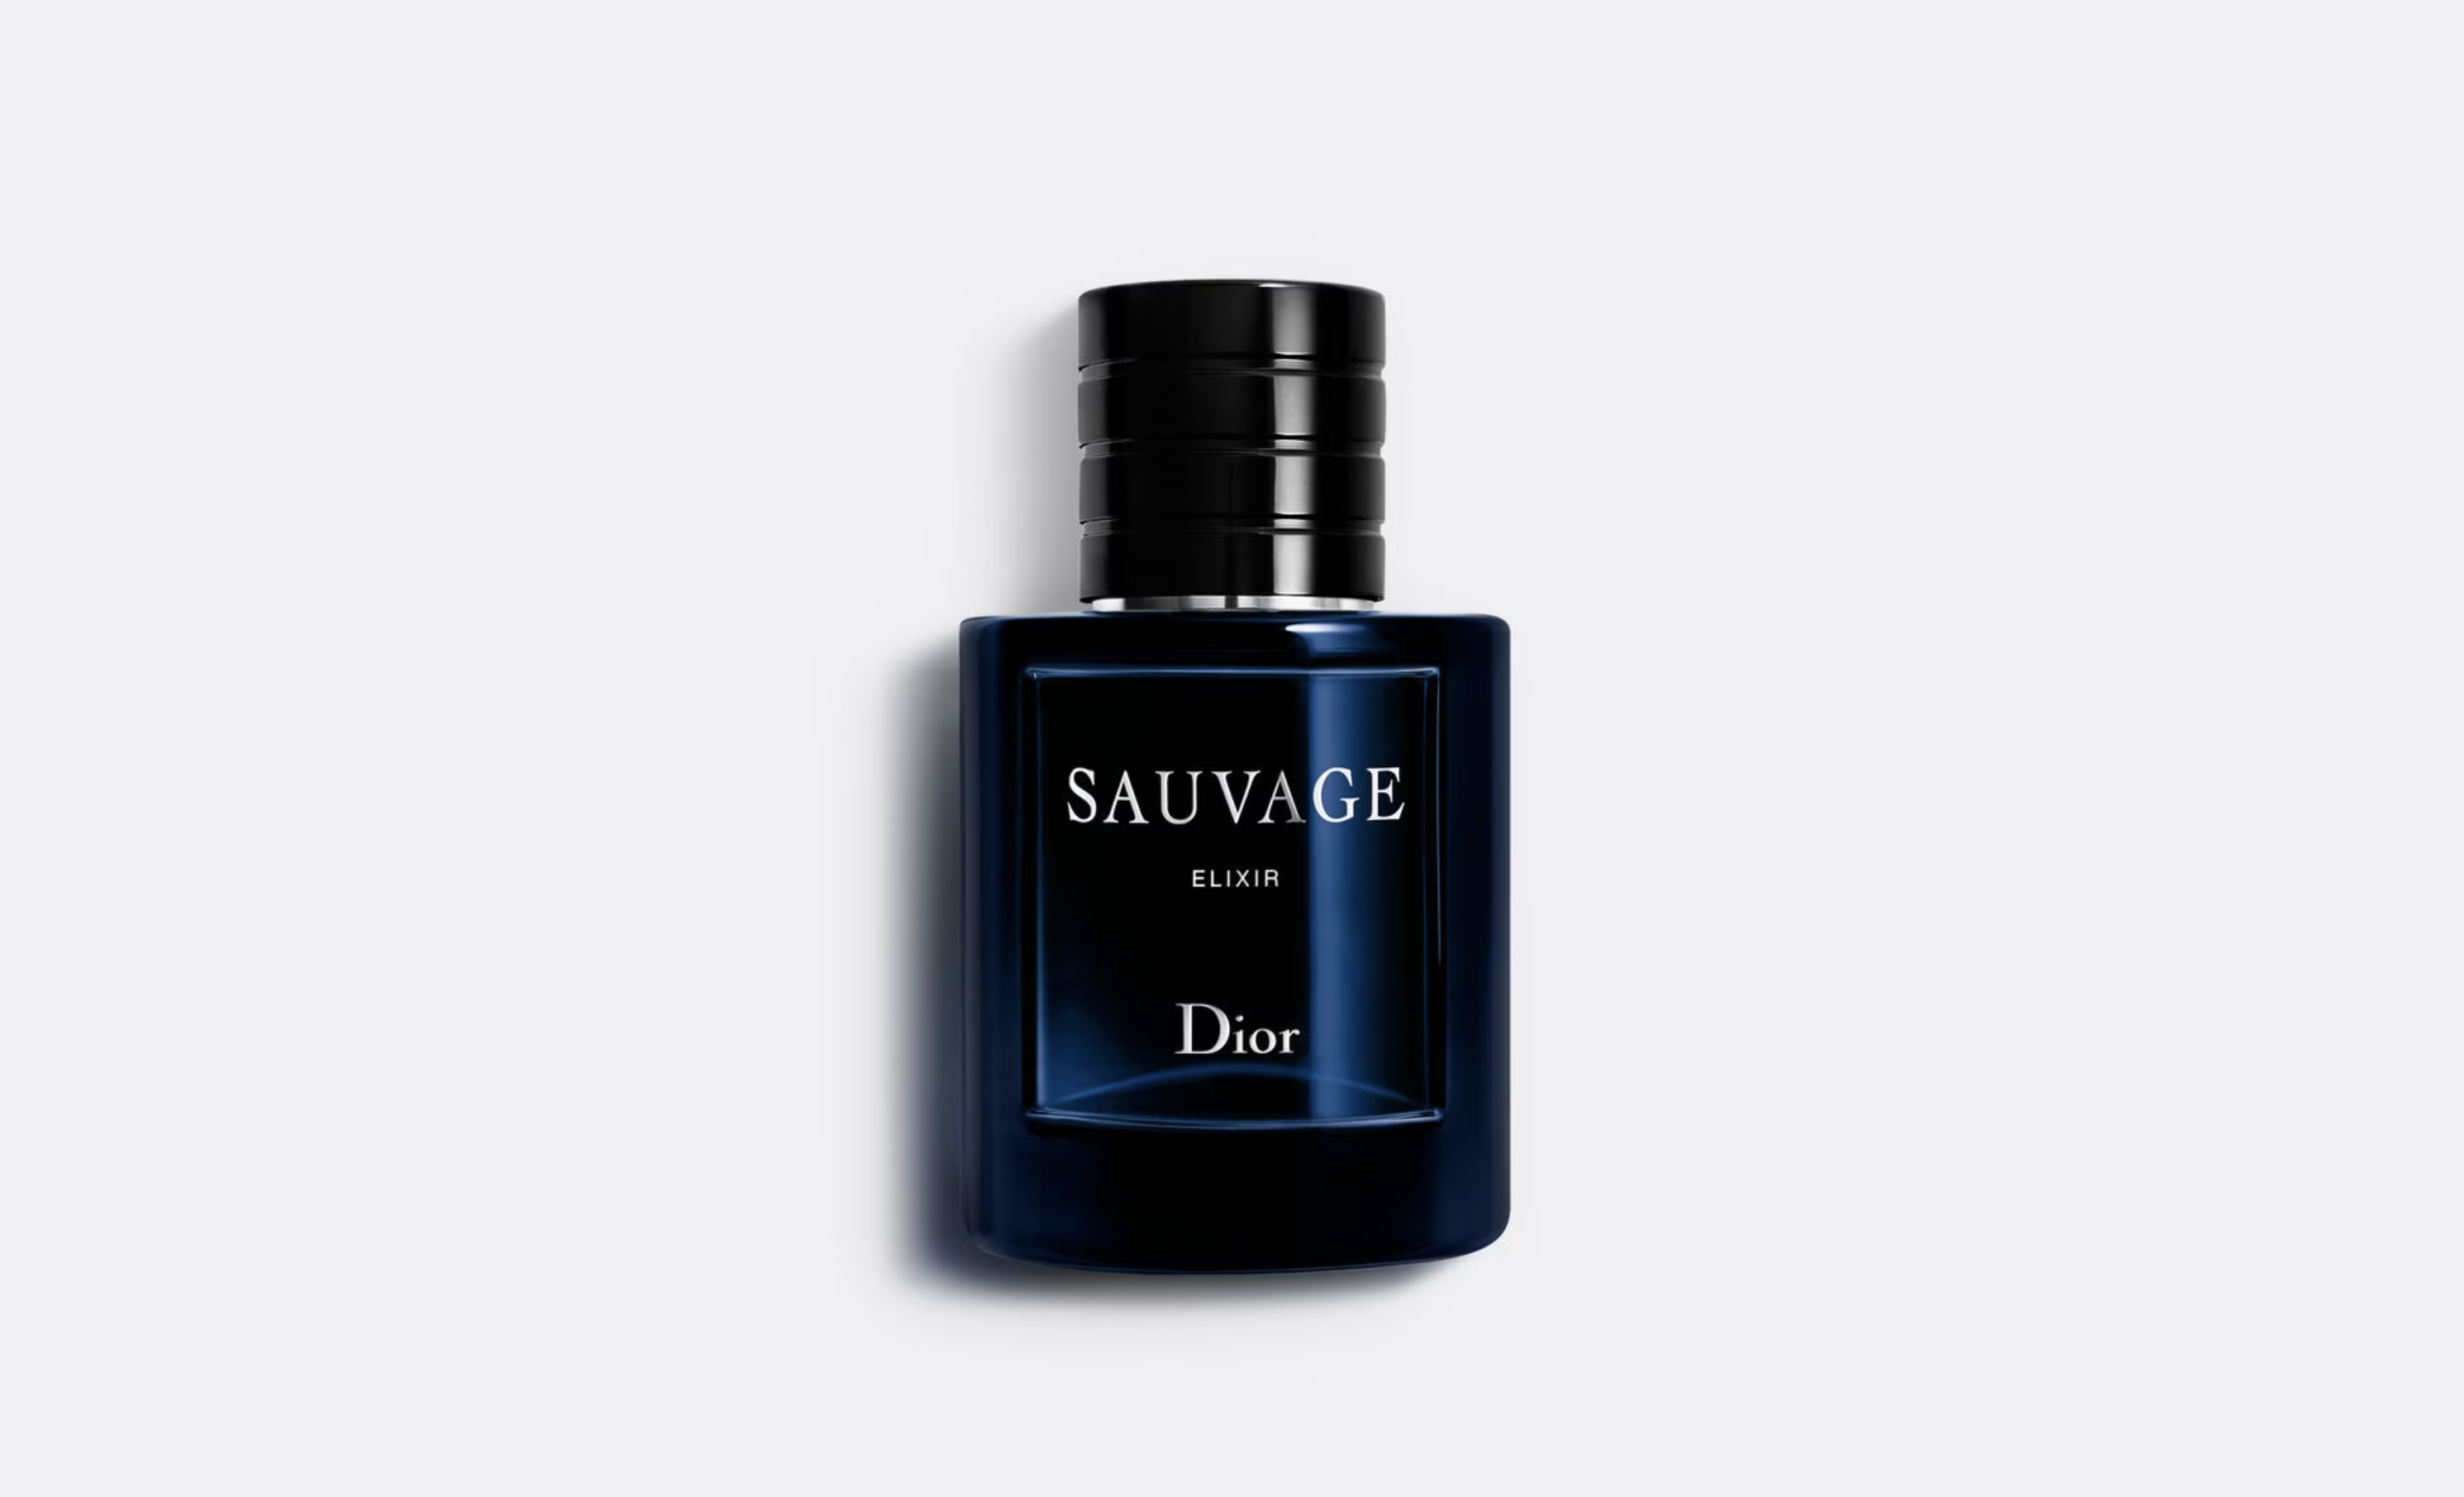 dior, elixir, sauvage, father's day fragrances